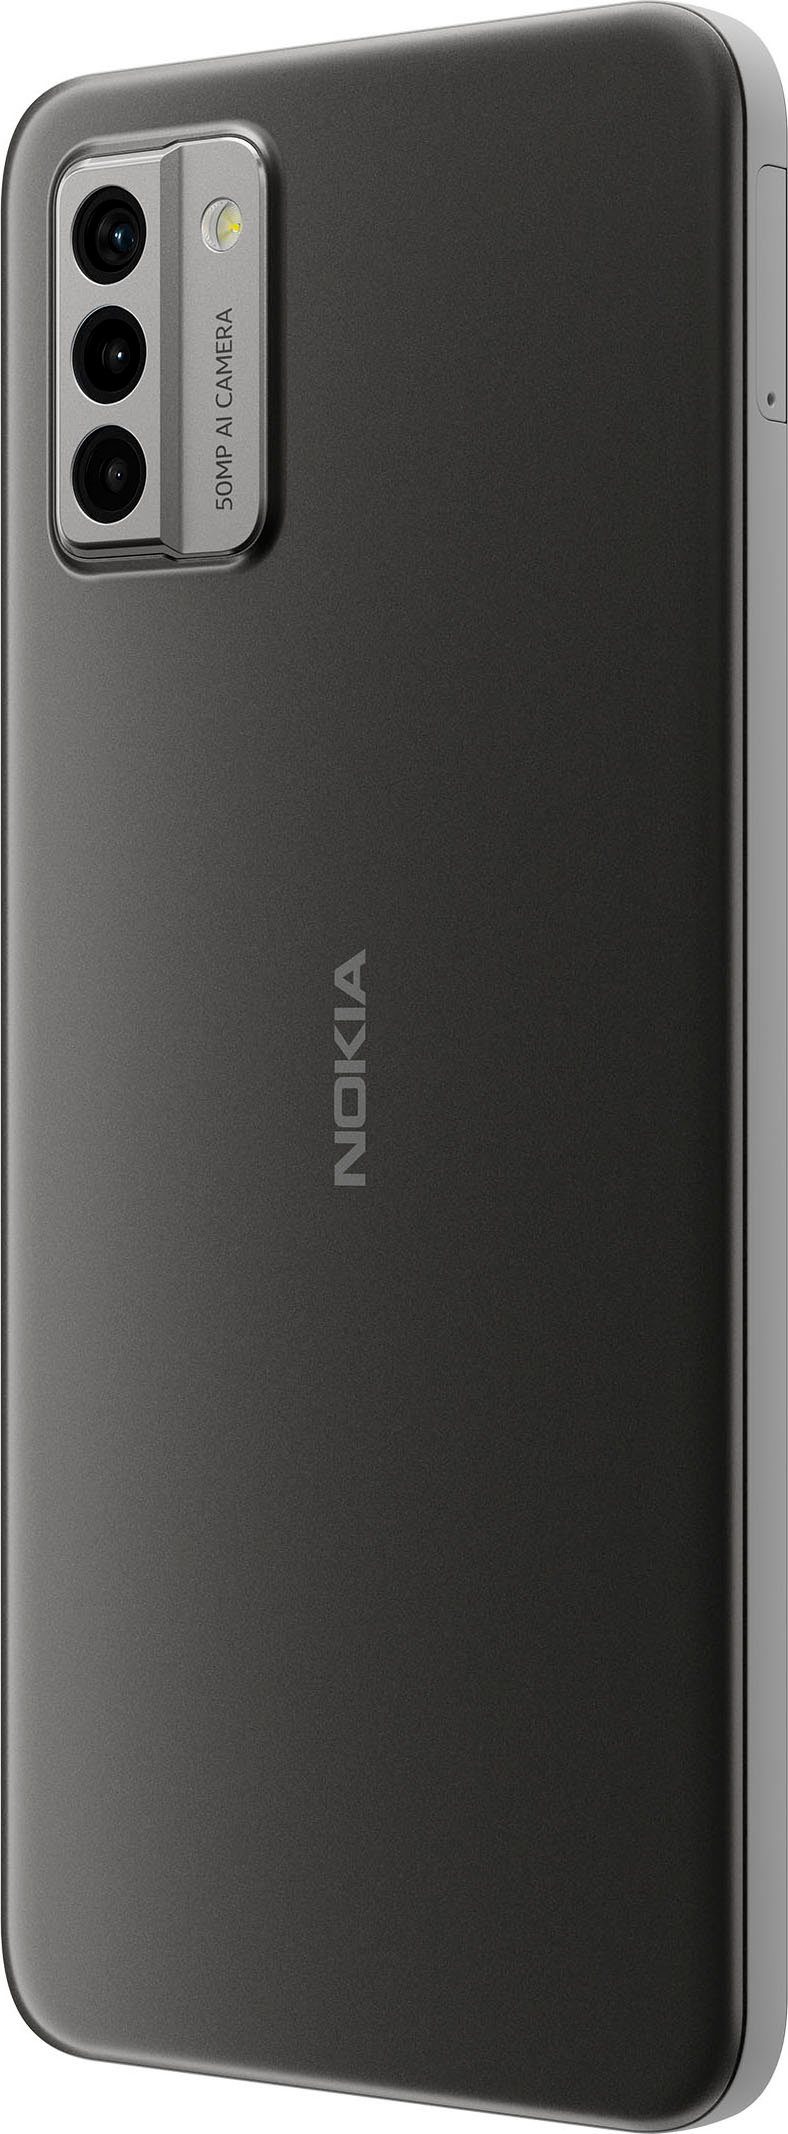 Nokia MP Speicherplatz, GB grau (16,56 cm/6,52 50 Kamera) Smartphone 64 G22 Zoll,